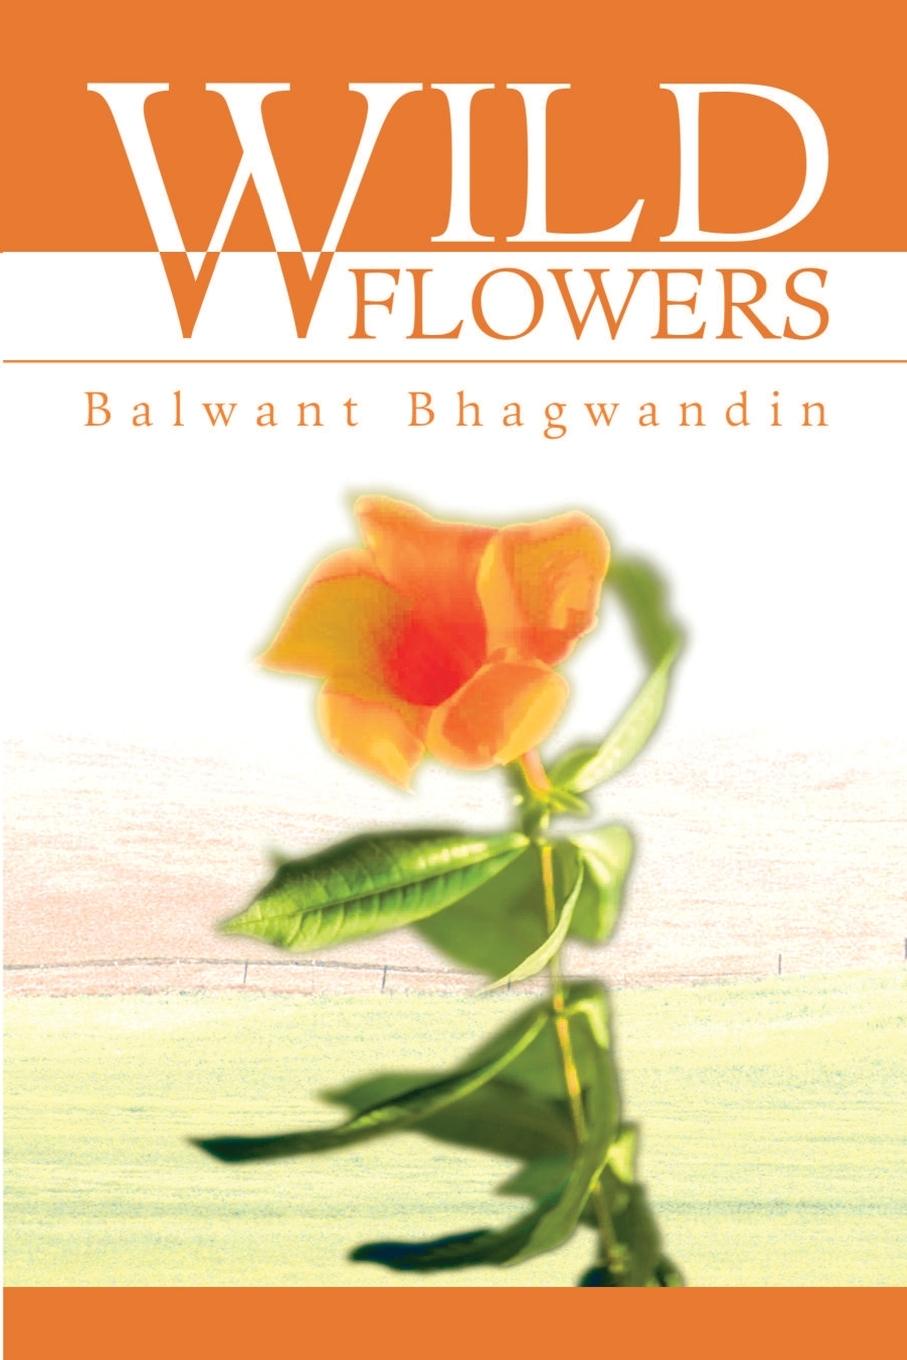 Wild Flowers - Bhagwandin, Balwant D